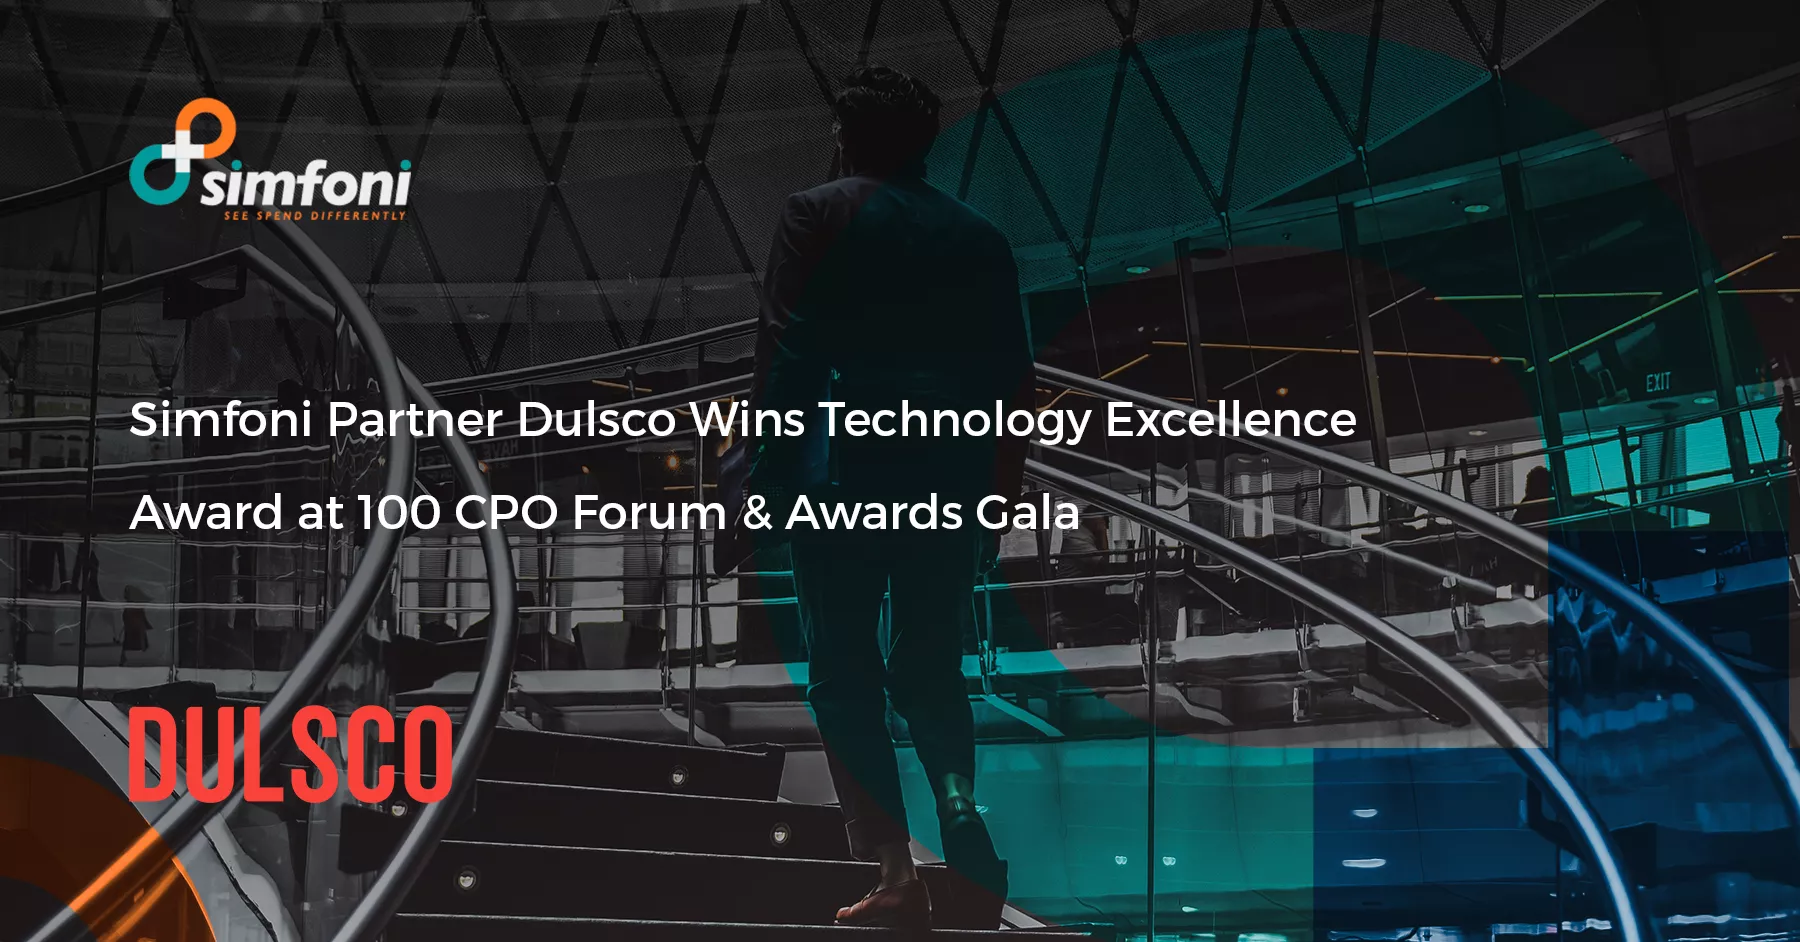 Dulsco Wins Technology Excellence Award at 100 CPO